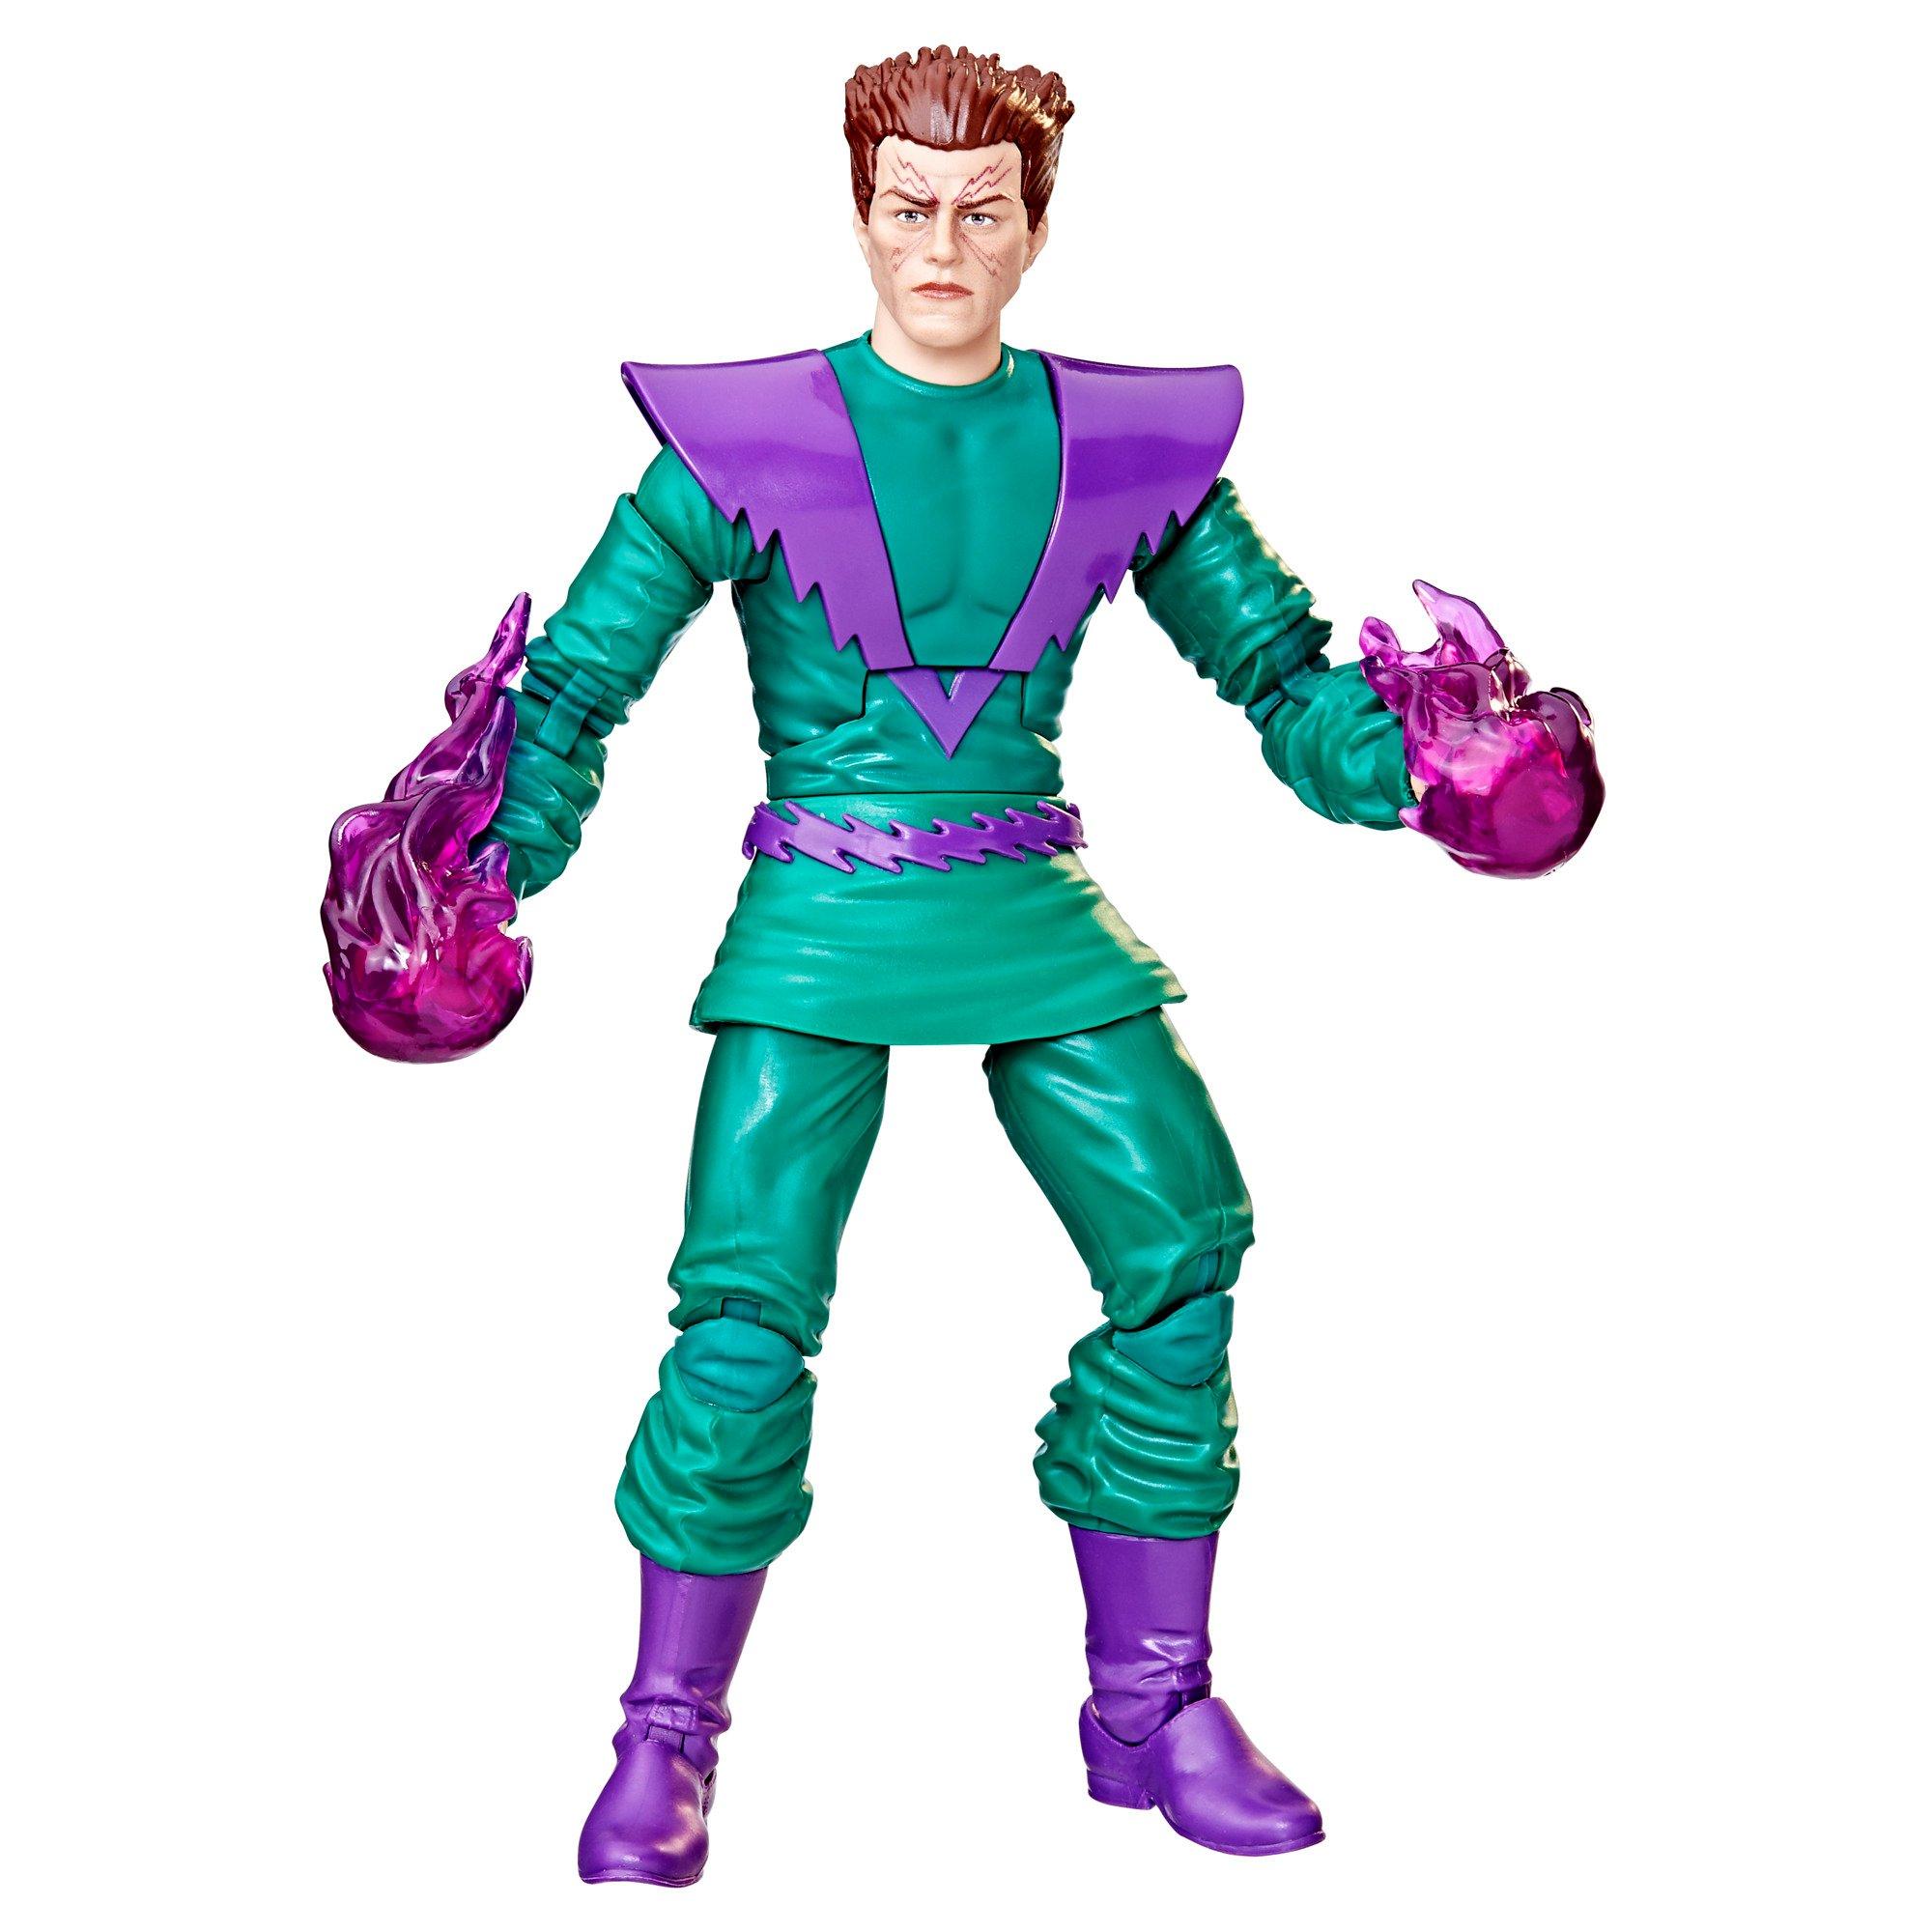 Hasbro Marvel Legends Series Avengers Molecule Man Build-A-Figure 6-in Action Figure